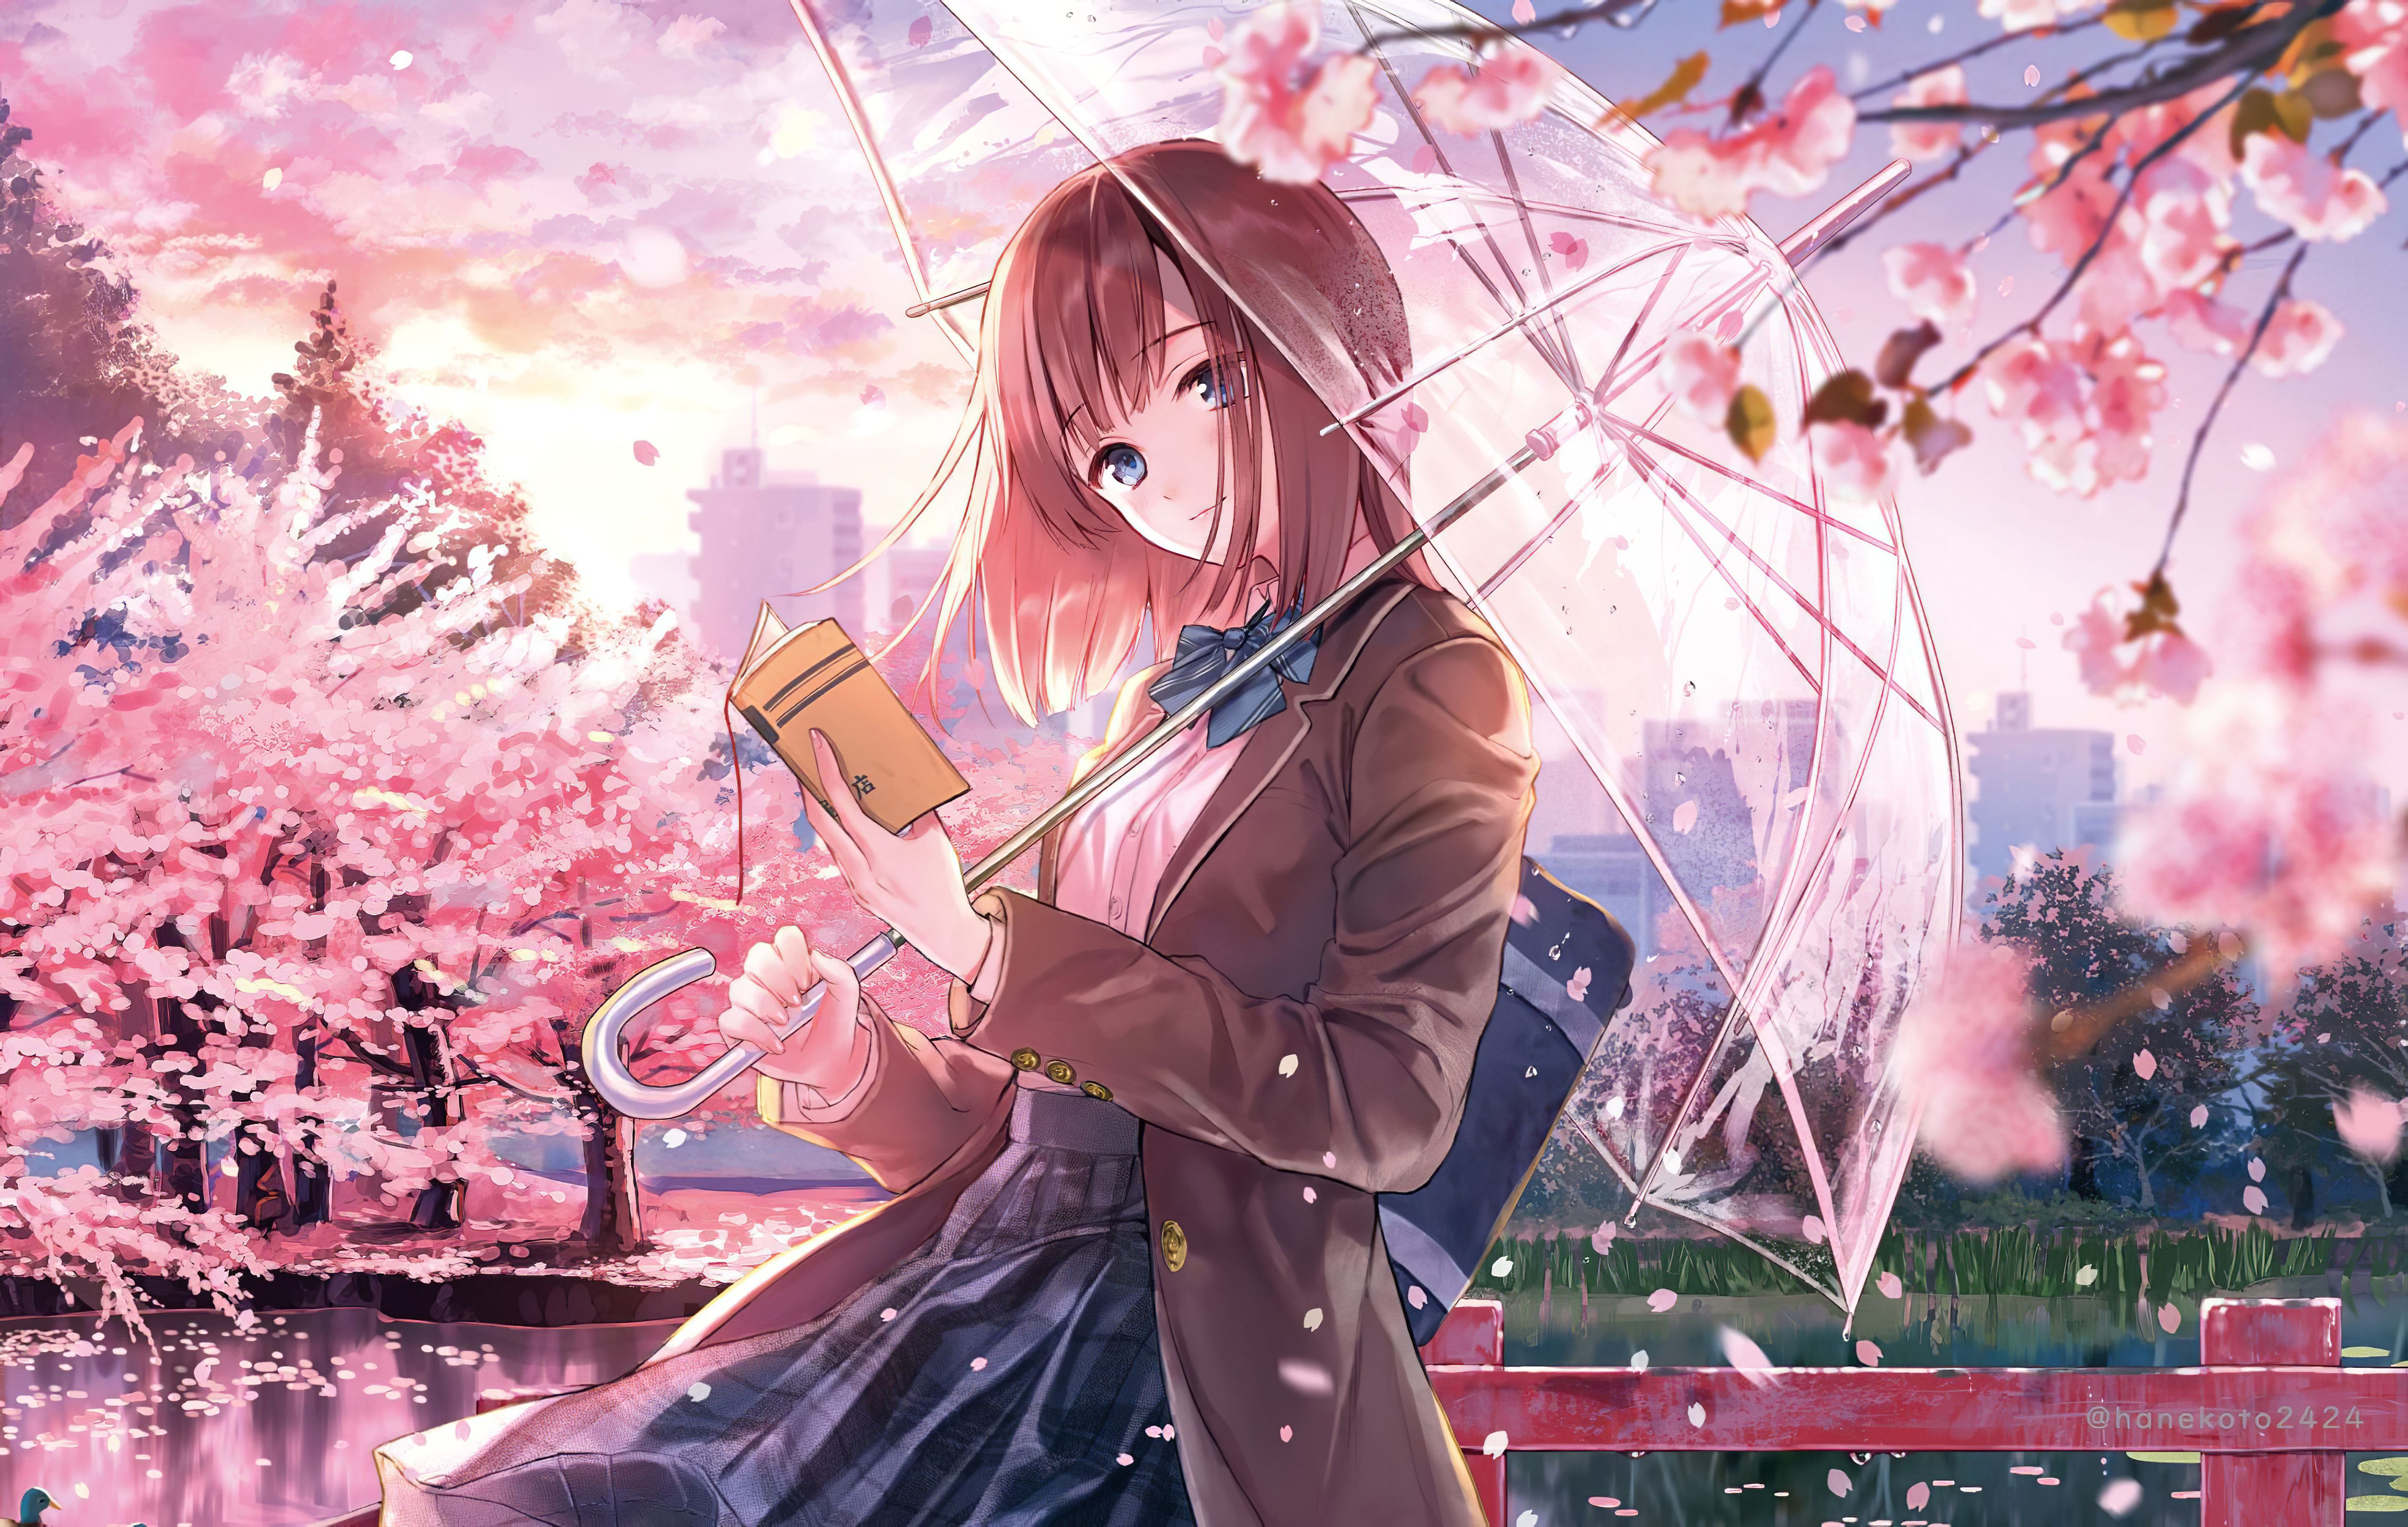 Anime Anime Girls Umbrella Flowers Cherry Blossom School Uniform Brunette Blue Eyes Artwork Hanekoto 5120x3246